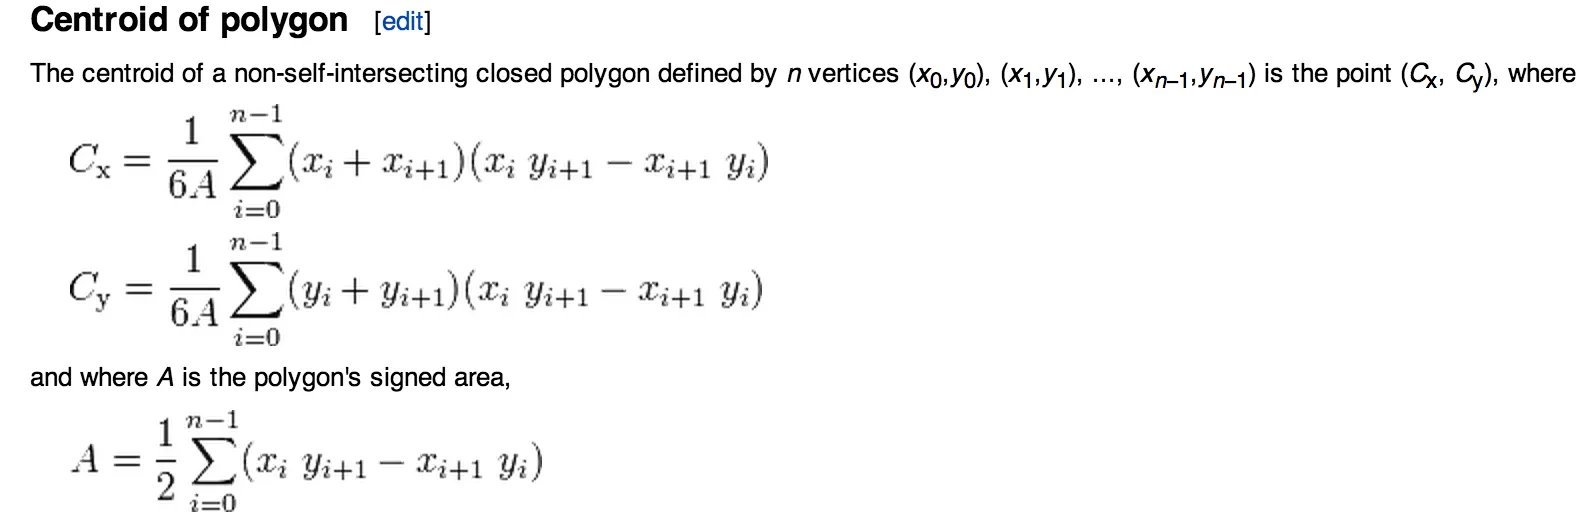 Wikipedia formula for centroid of polygon